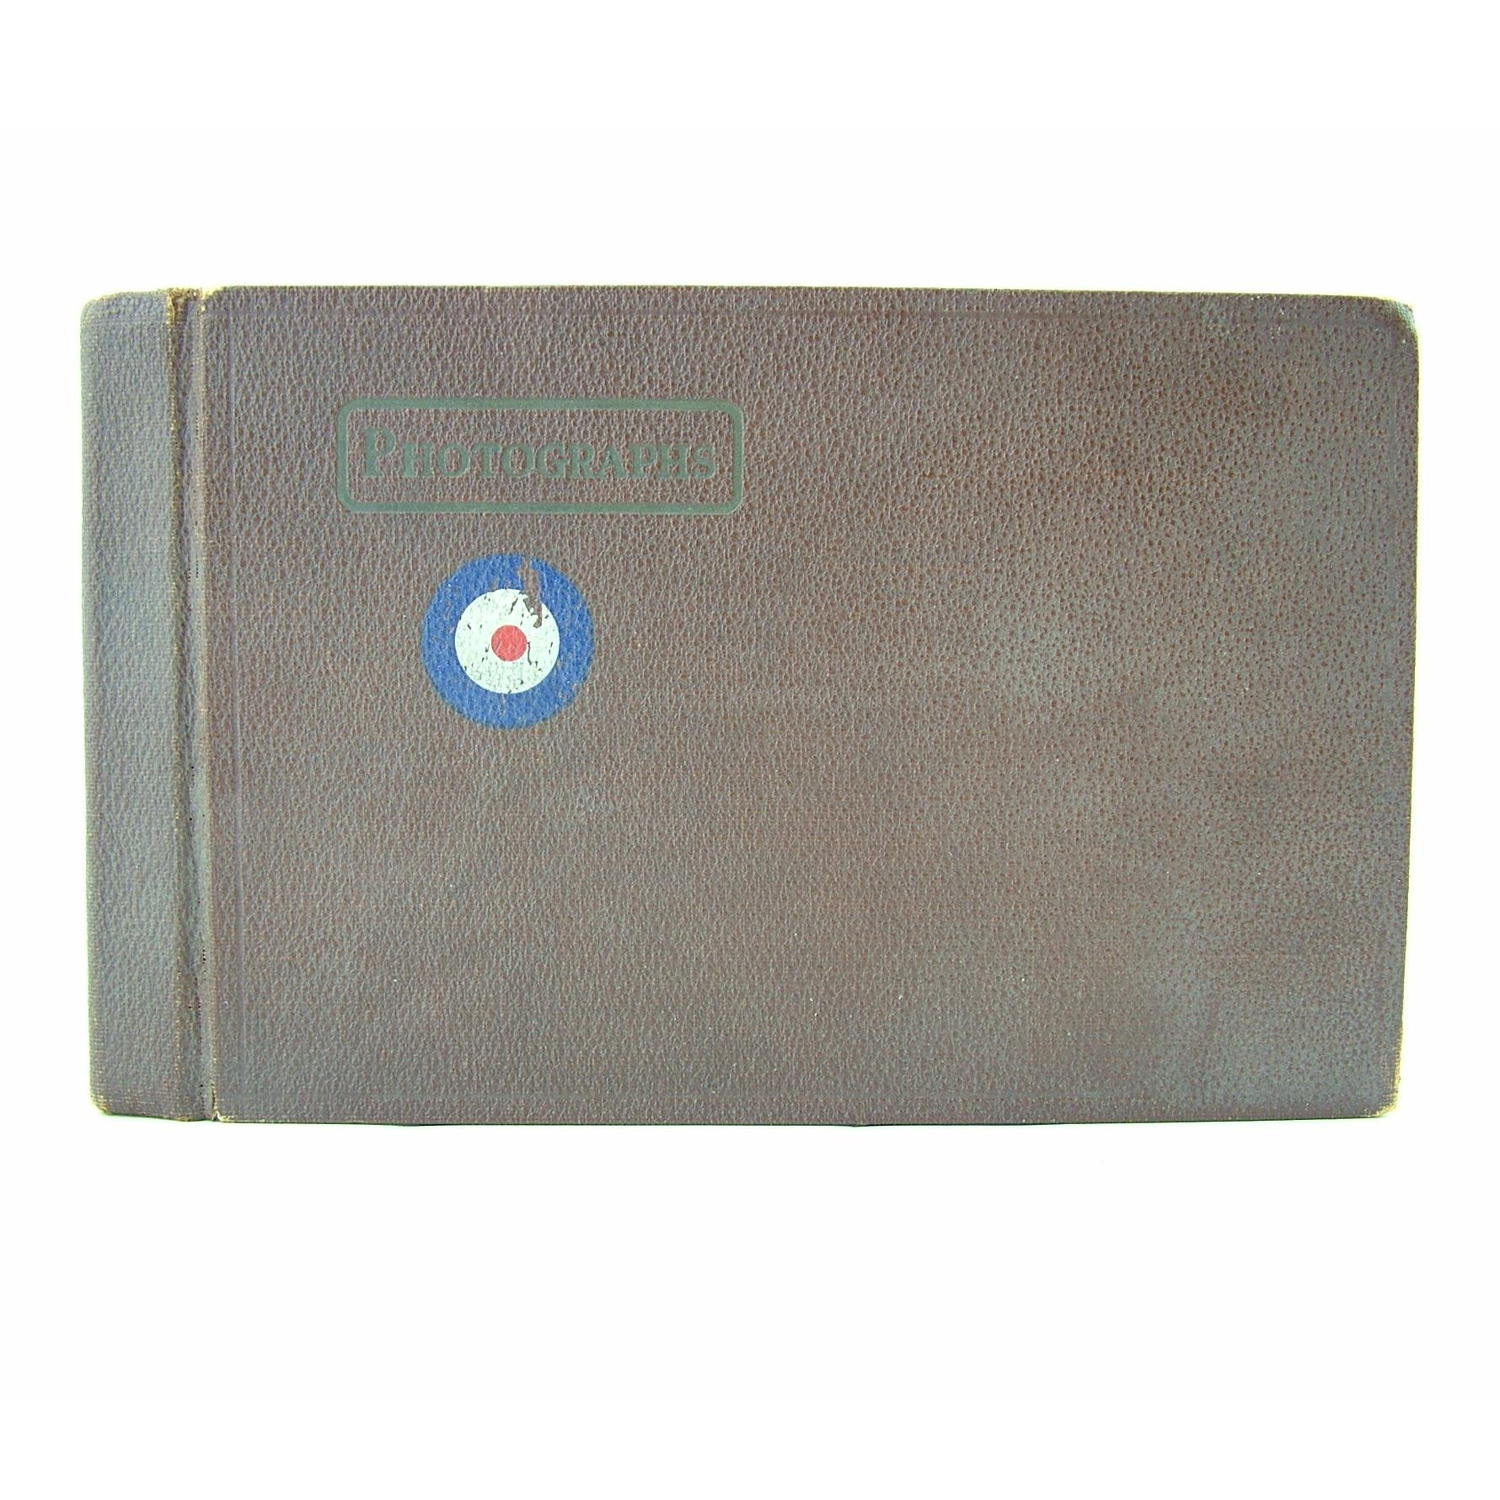 RAF aircraft identification album c.1943